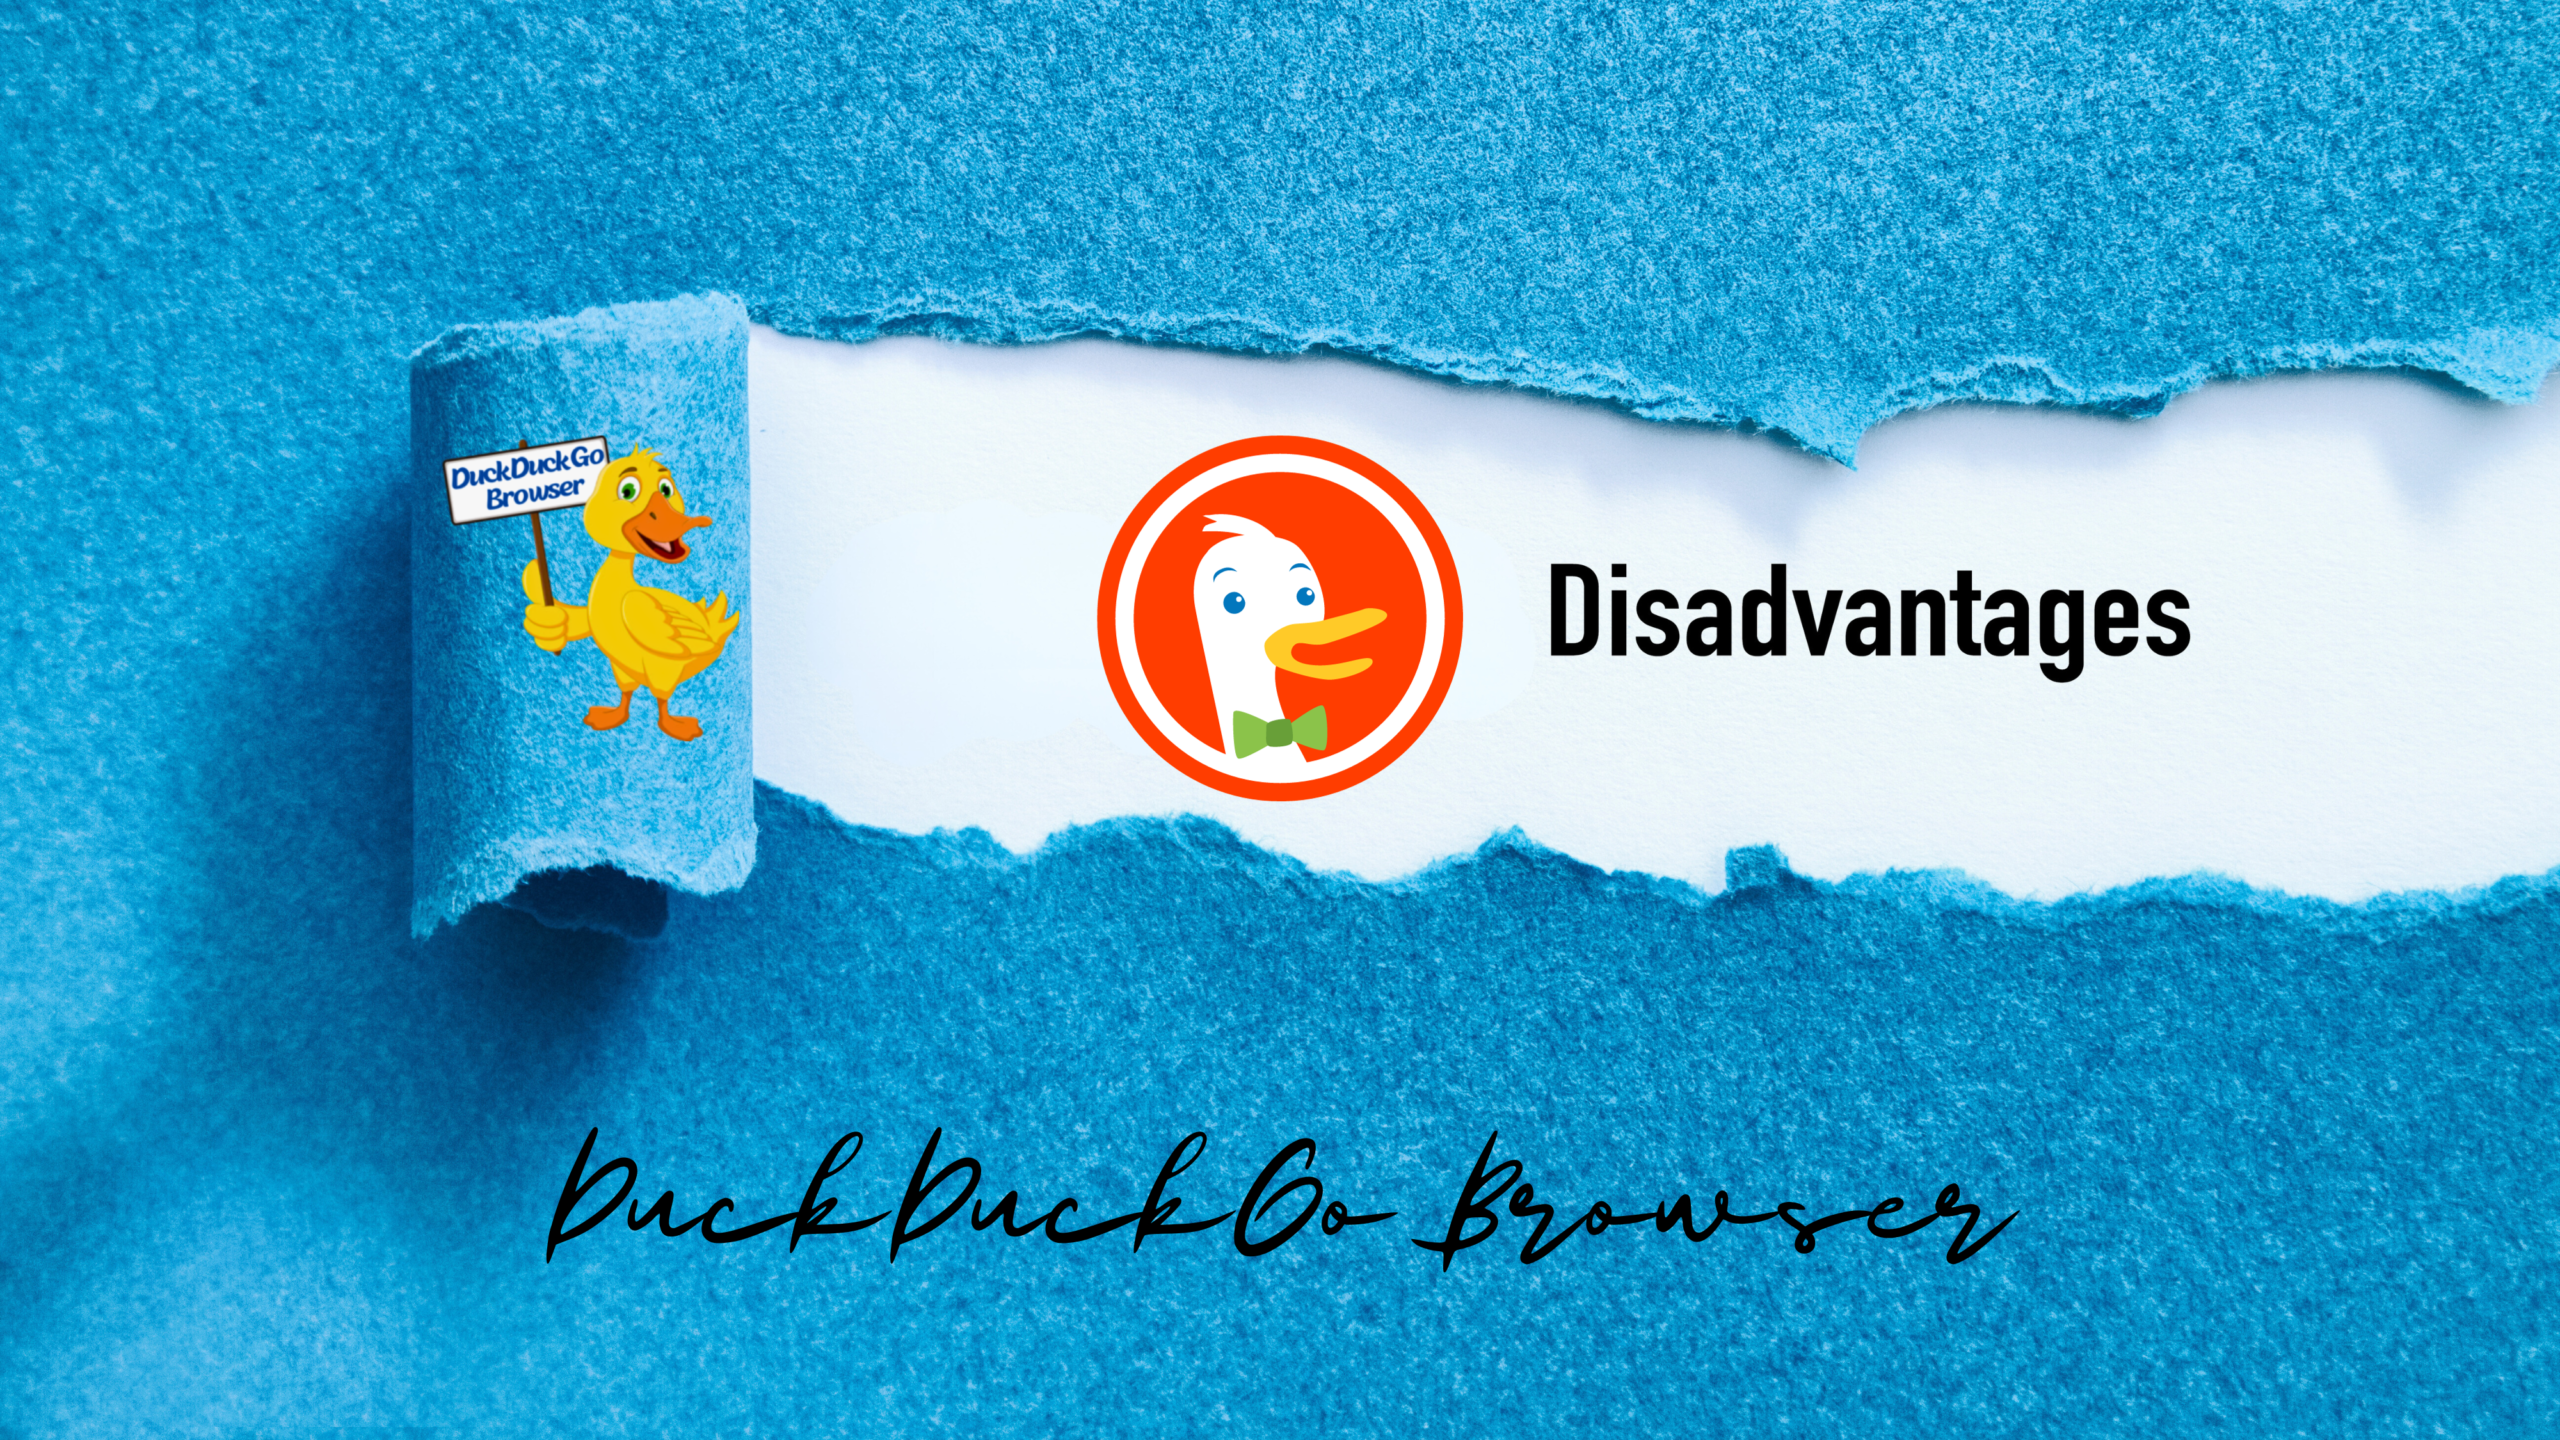 Disadvantages of DuckDuckGo